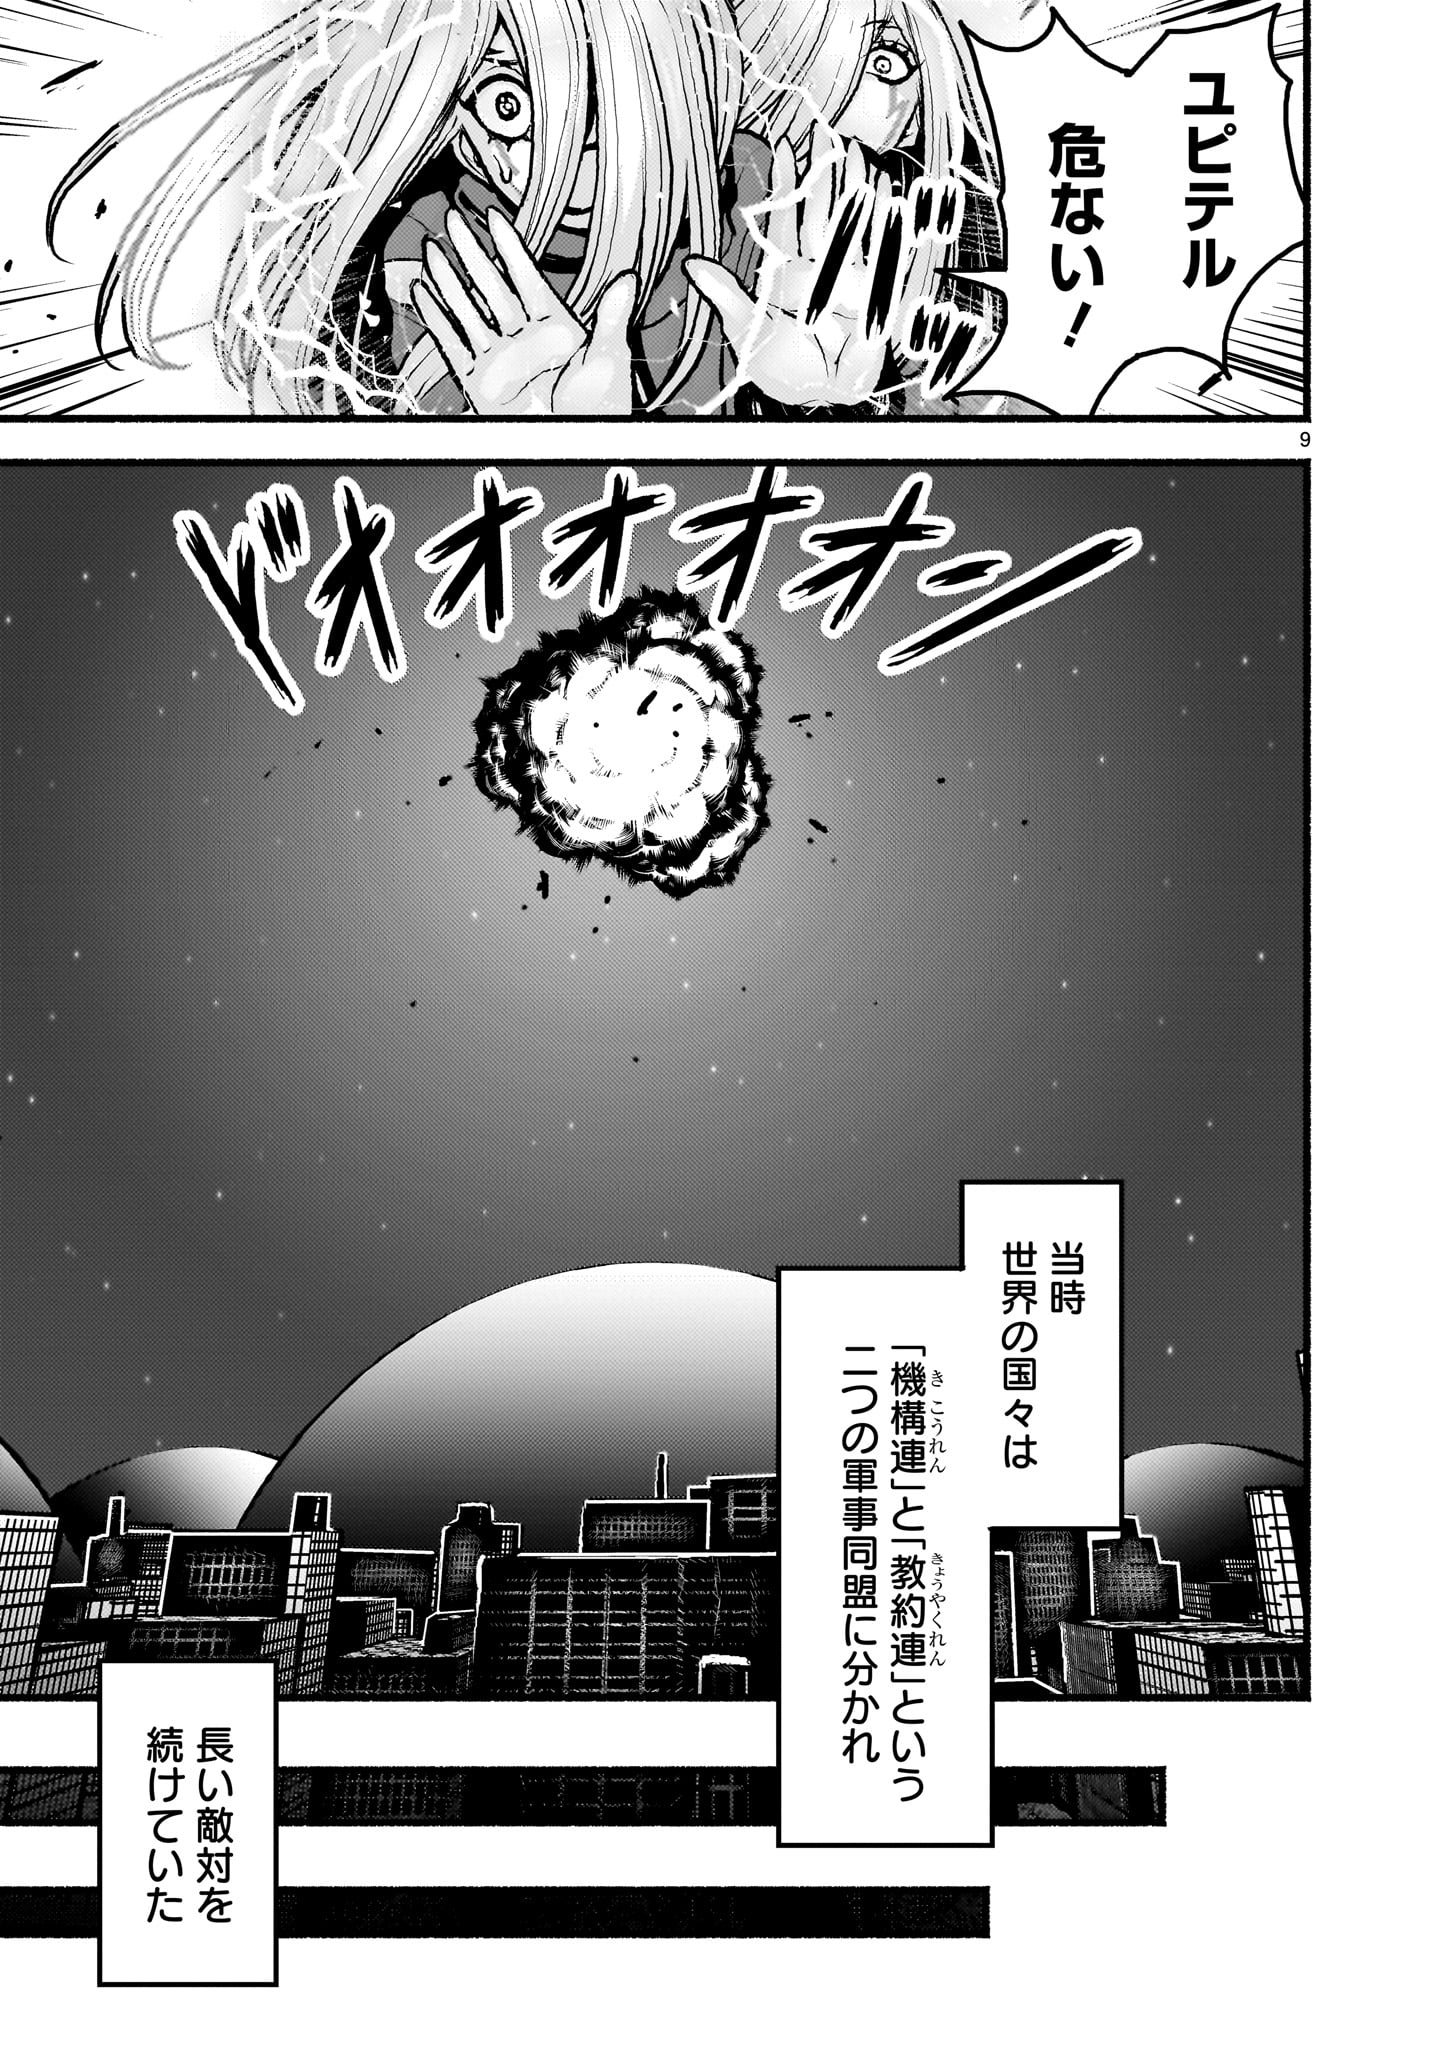 Kaminaki Sekai no Kamisama Katsudou - Chapter 51 - Page 9